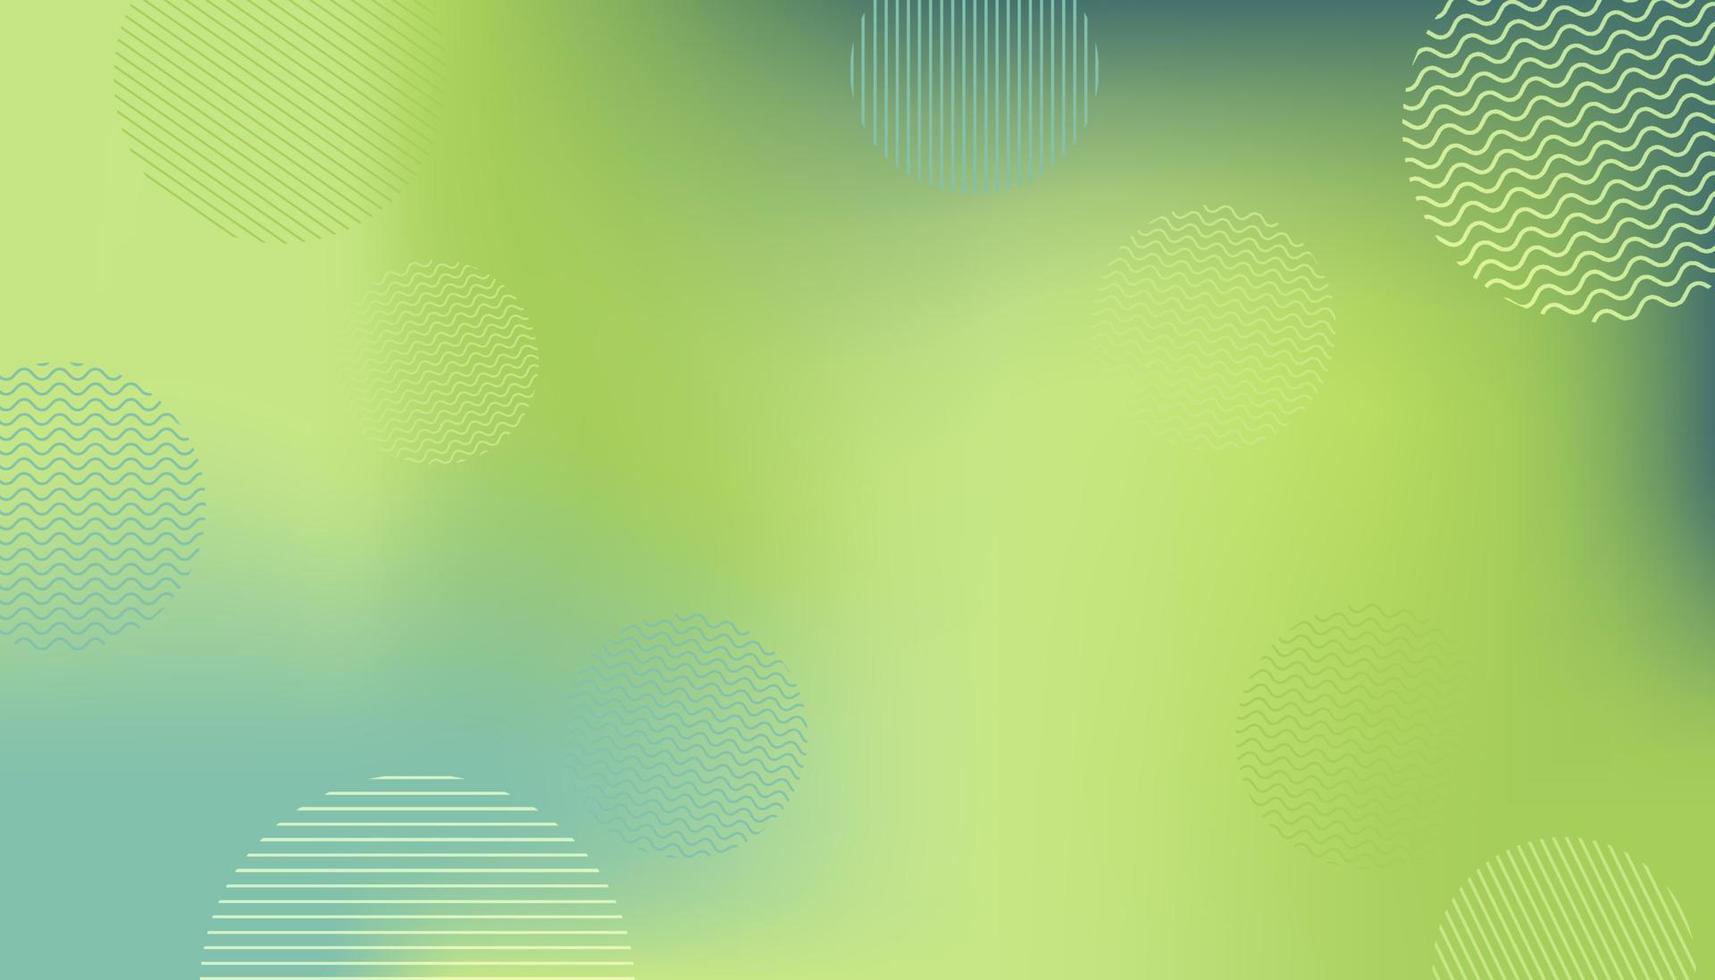 Green liquid effects background vector